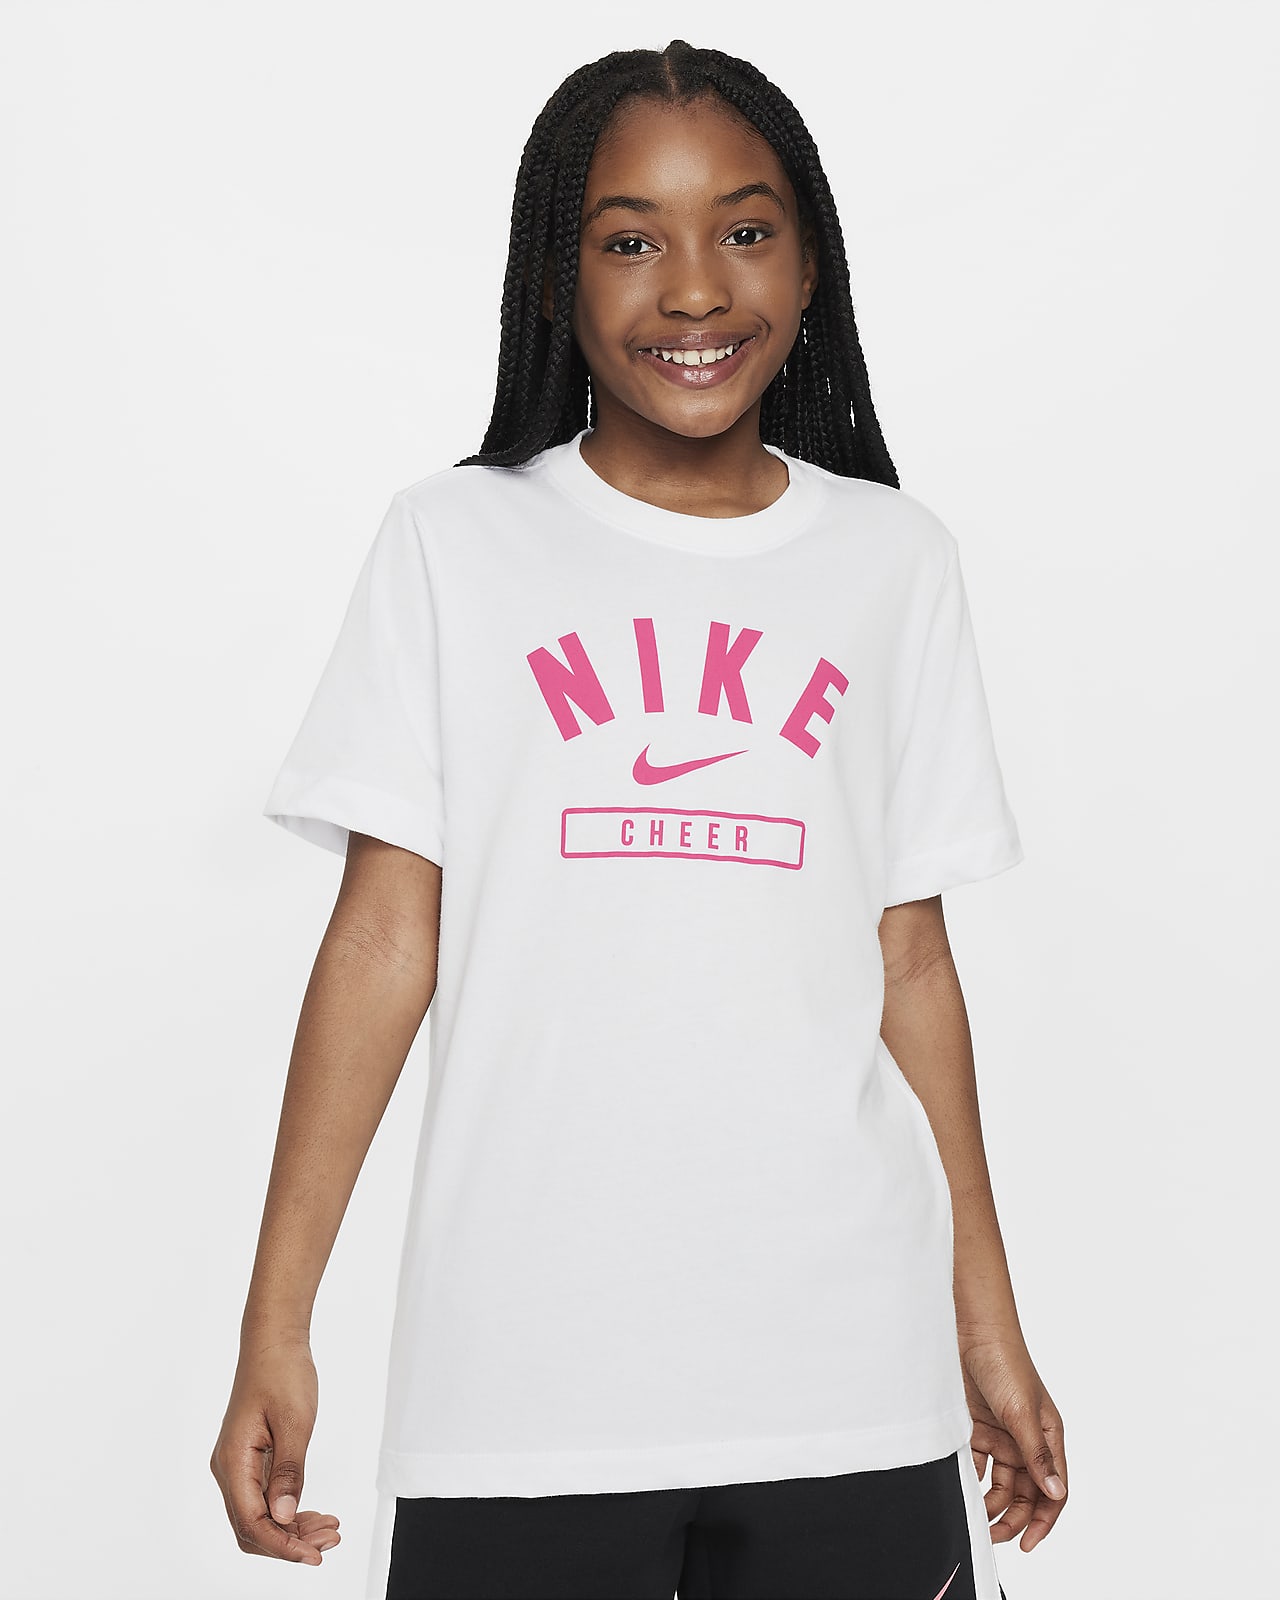 Nike Big Kids' (Girls') Cheer T-Shirt